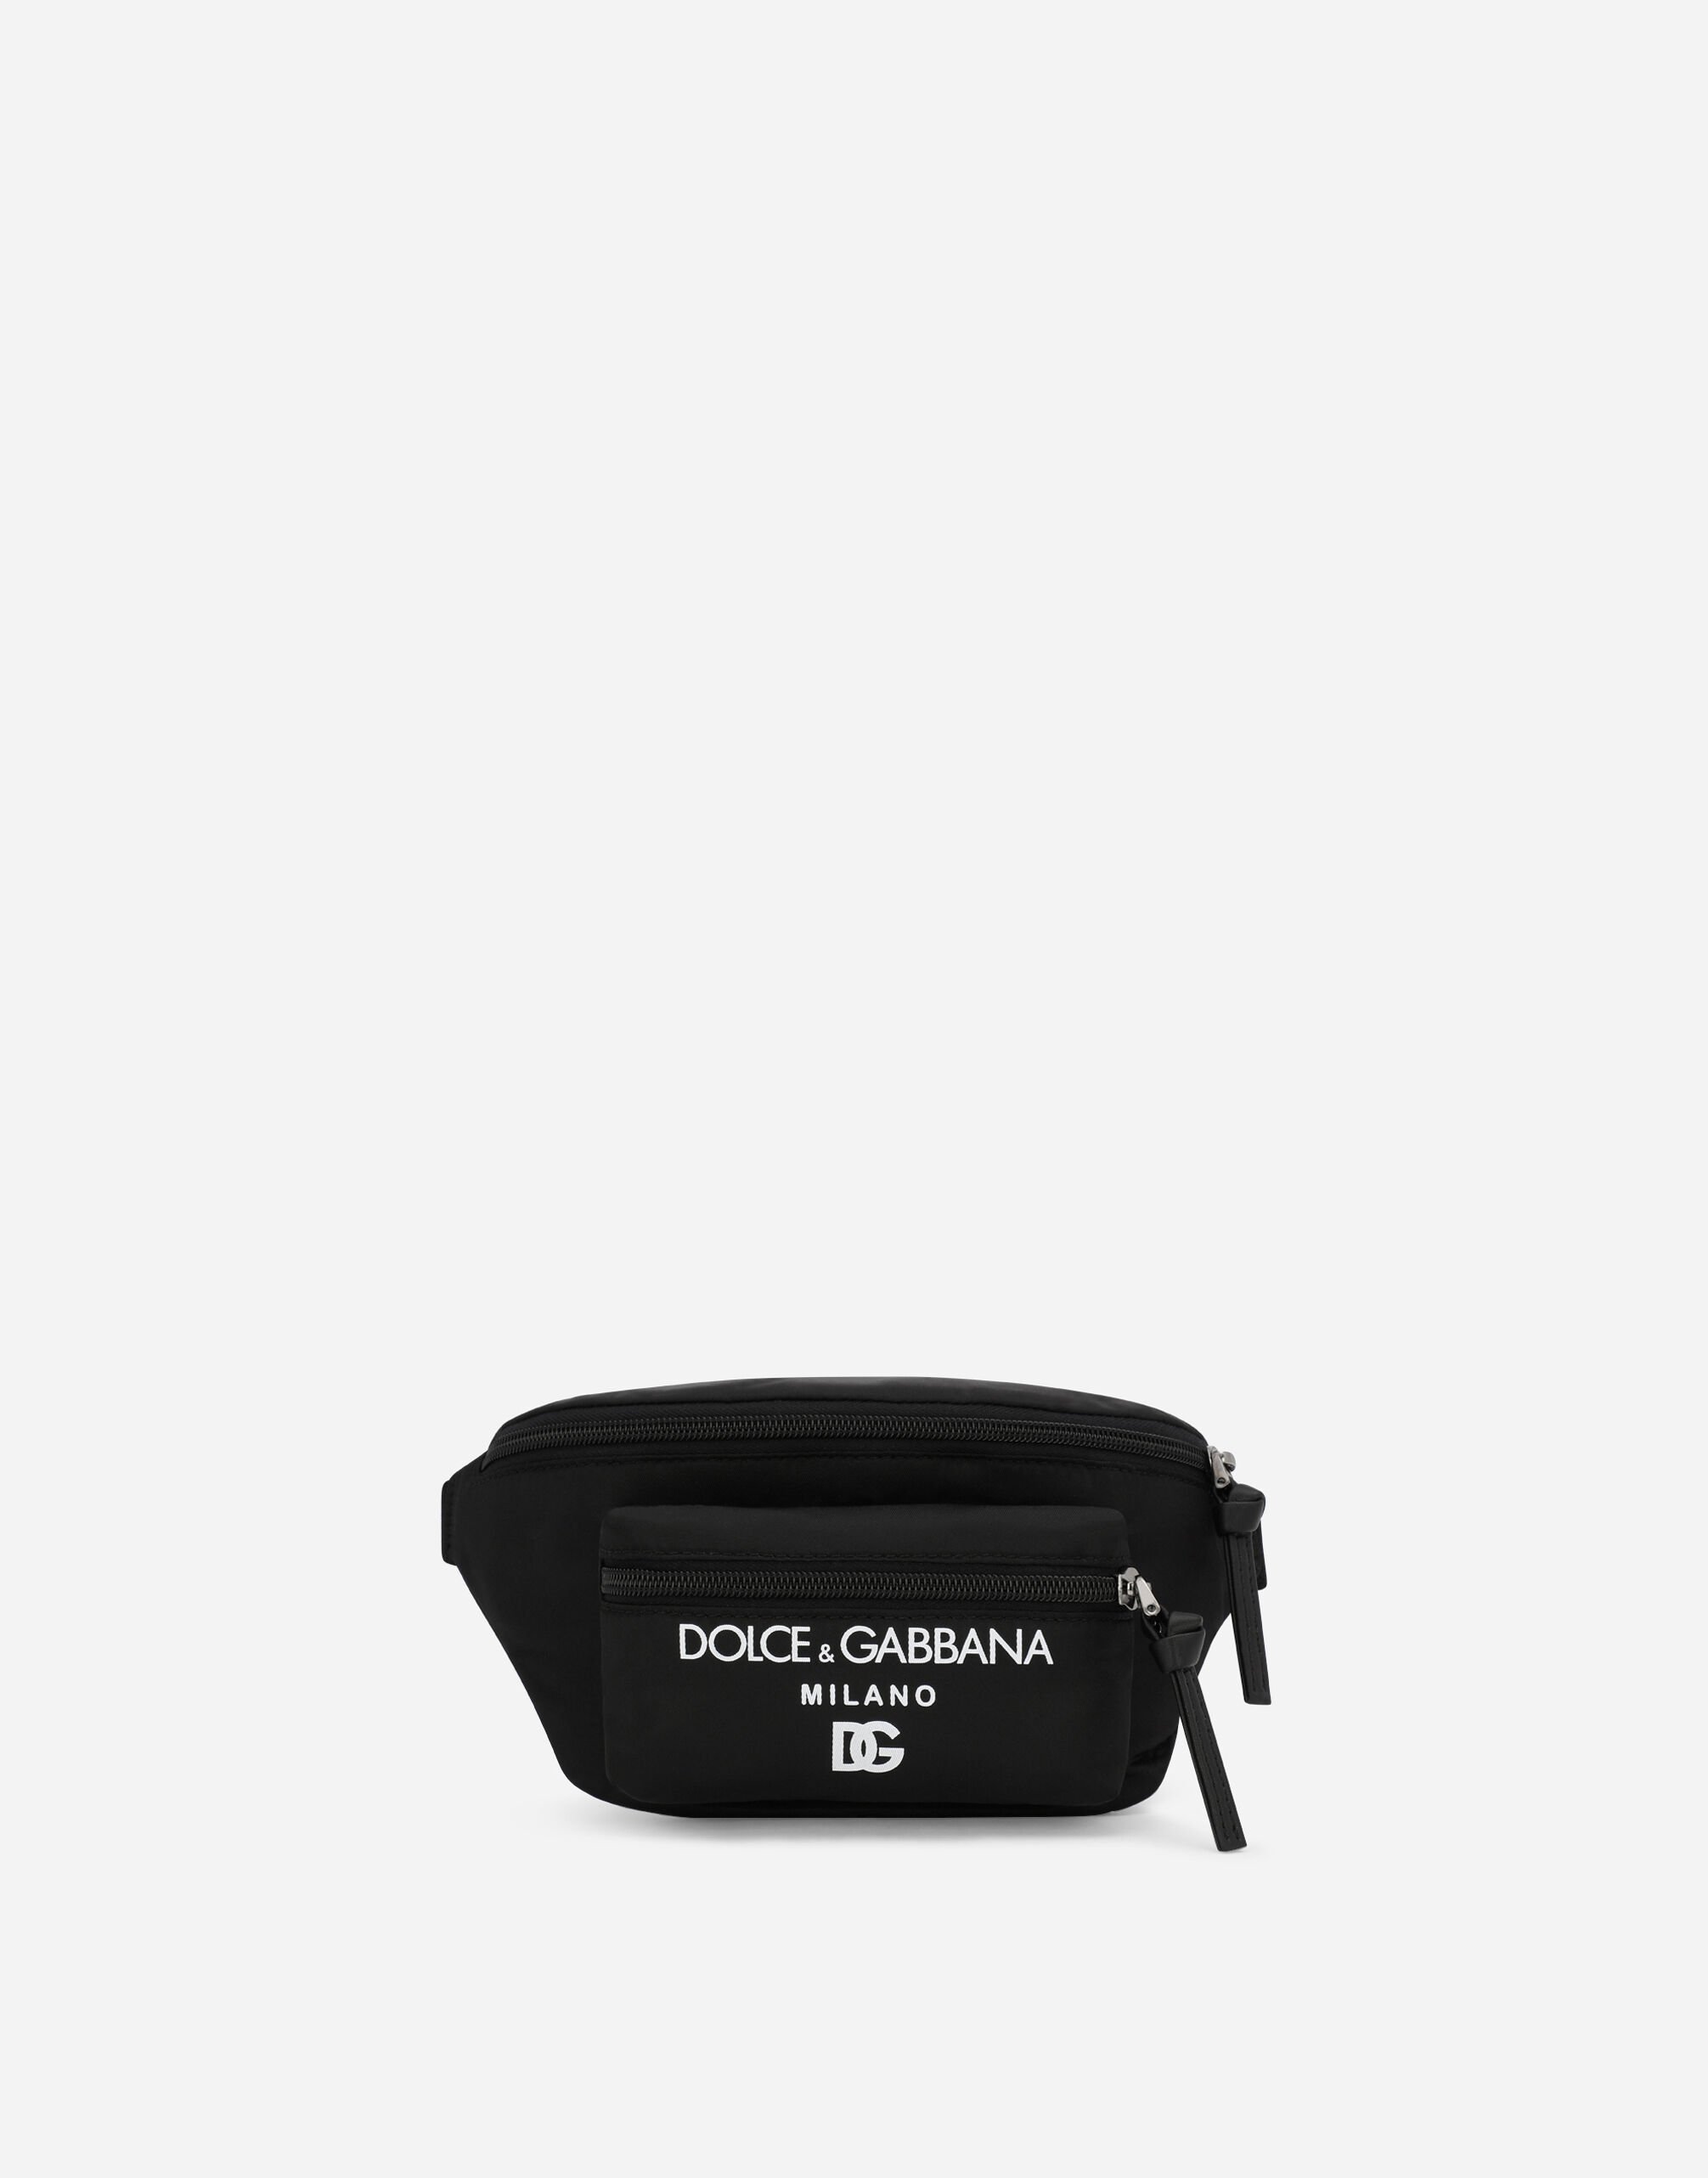 Dolce & Gabbana حقيبة خصر نايلون بطبعة DOLCE&GABBANA ميلانو بيج EM0123AN262